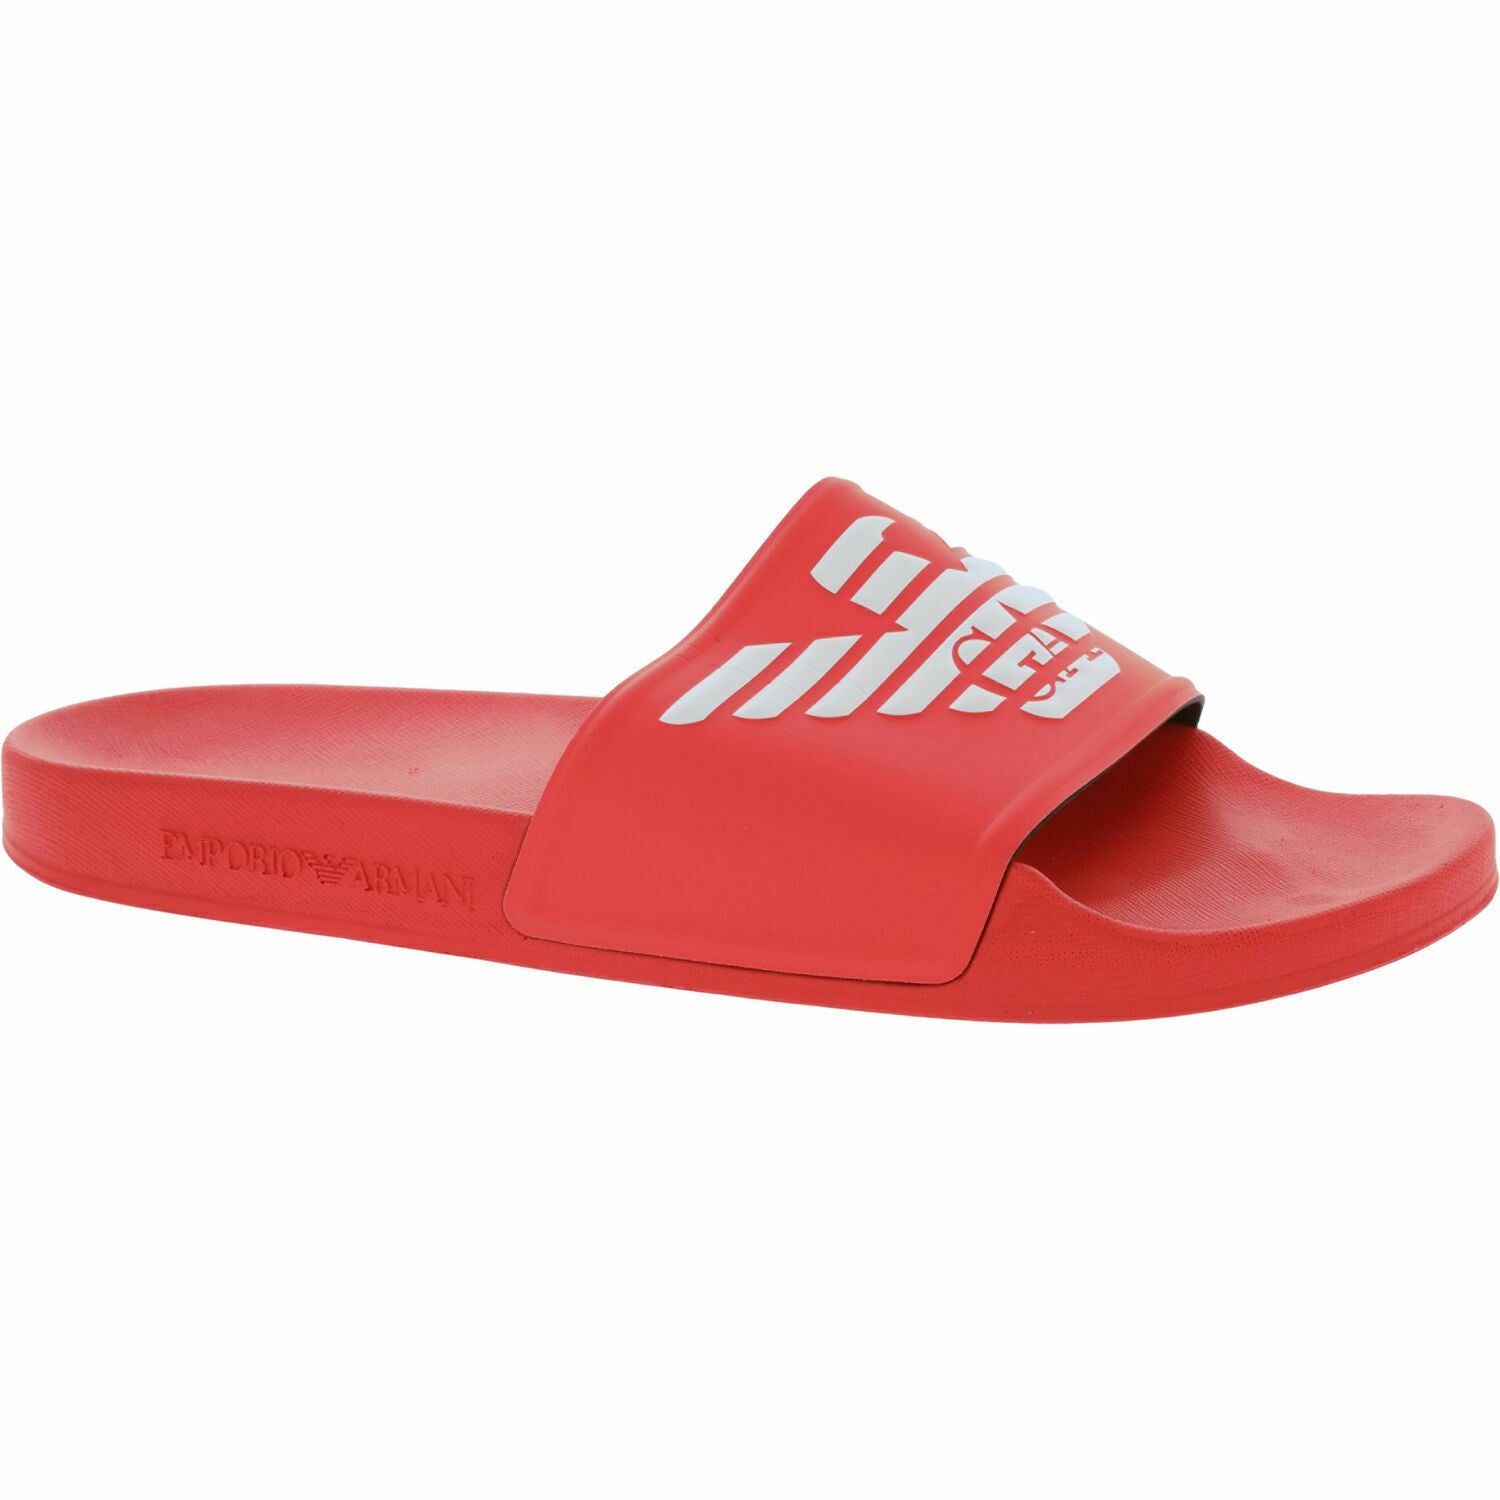 EMPORIO ARMANI Men's Sliders / Beach Pool Sandals, Red, size UK 9 / EU 43